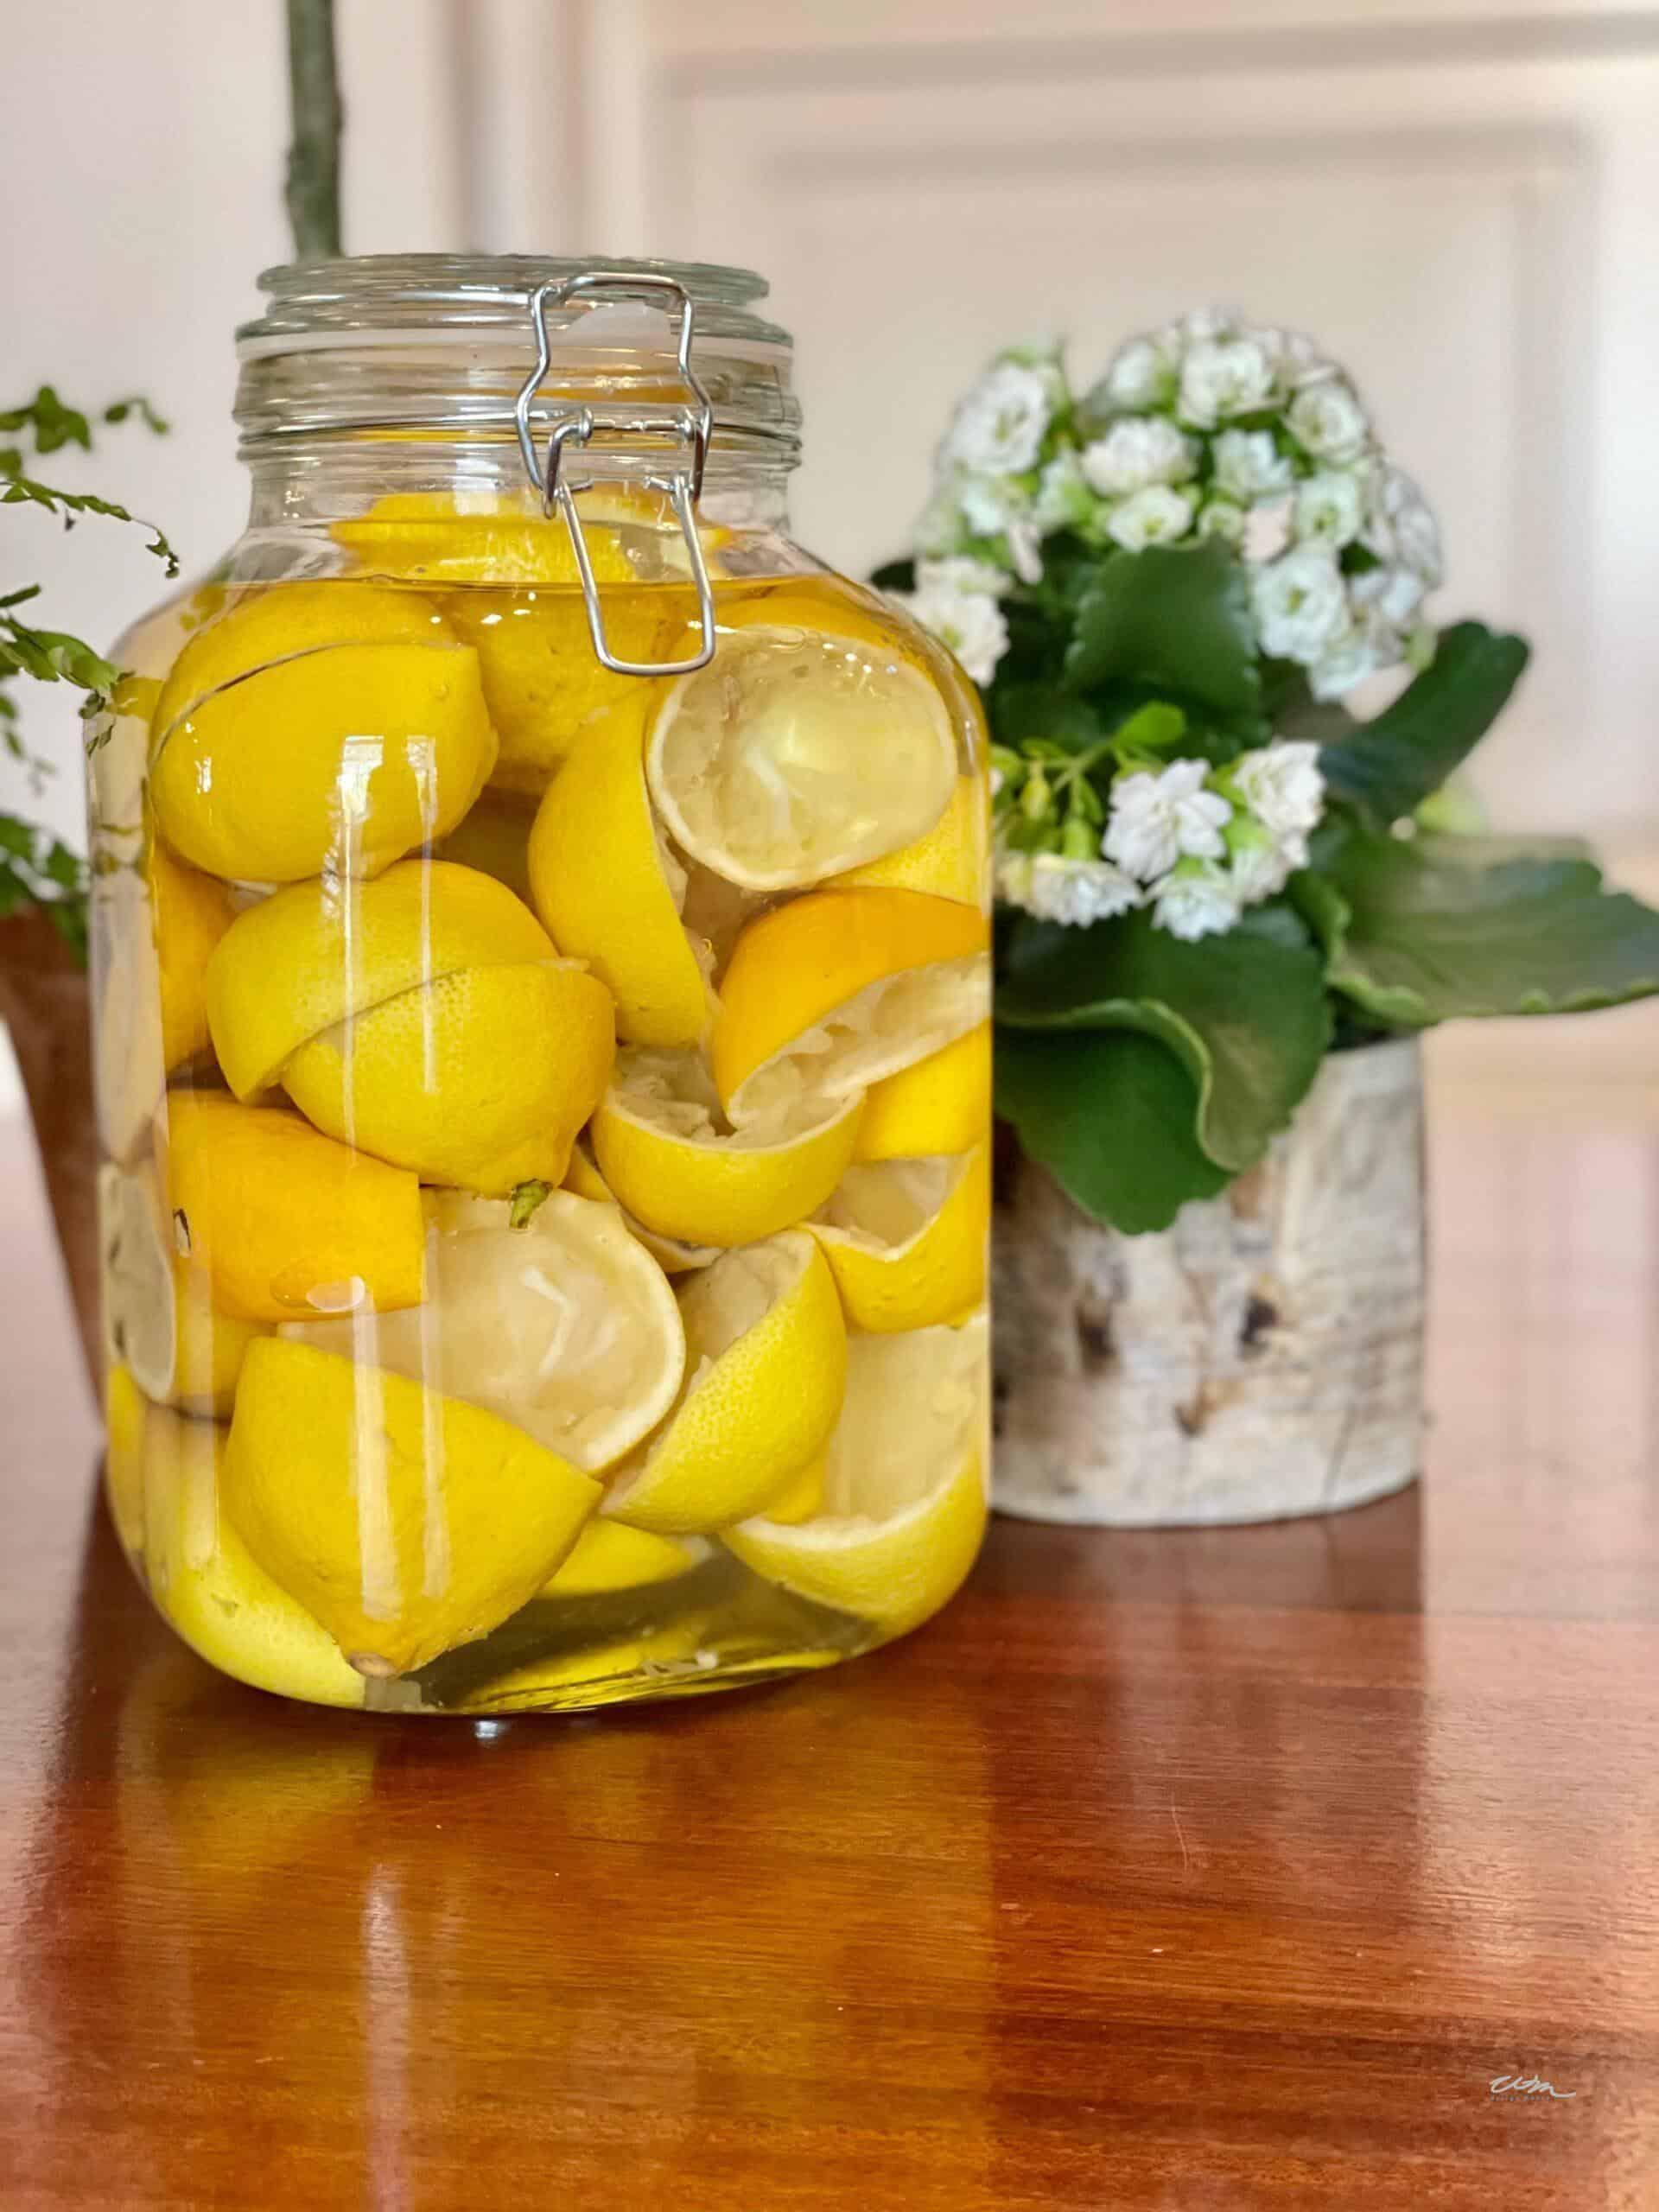 Re-Purpose your Spent Lemons